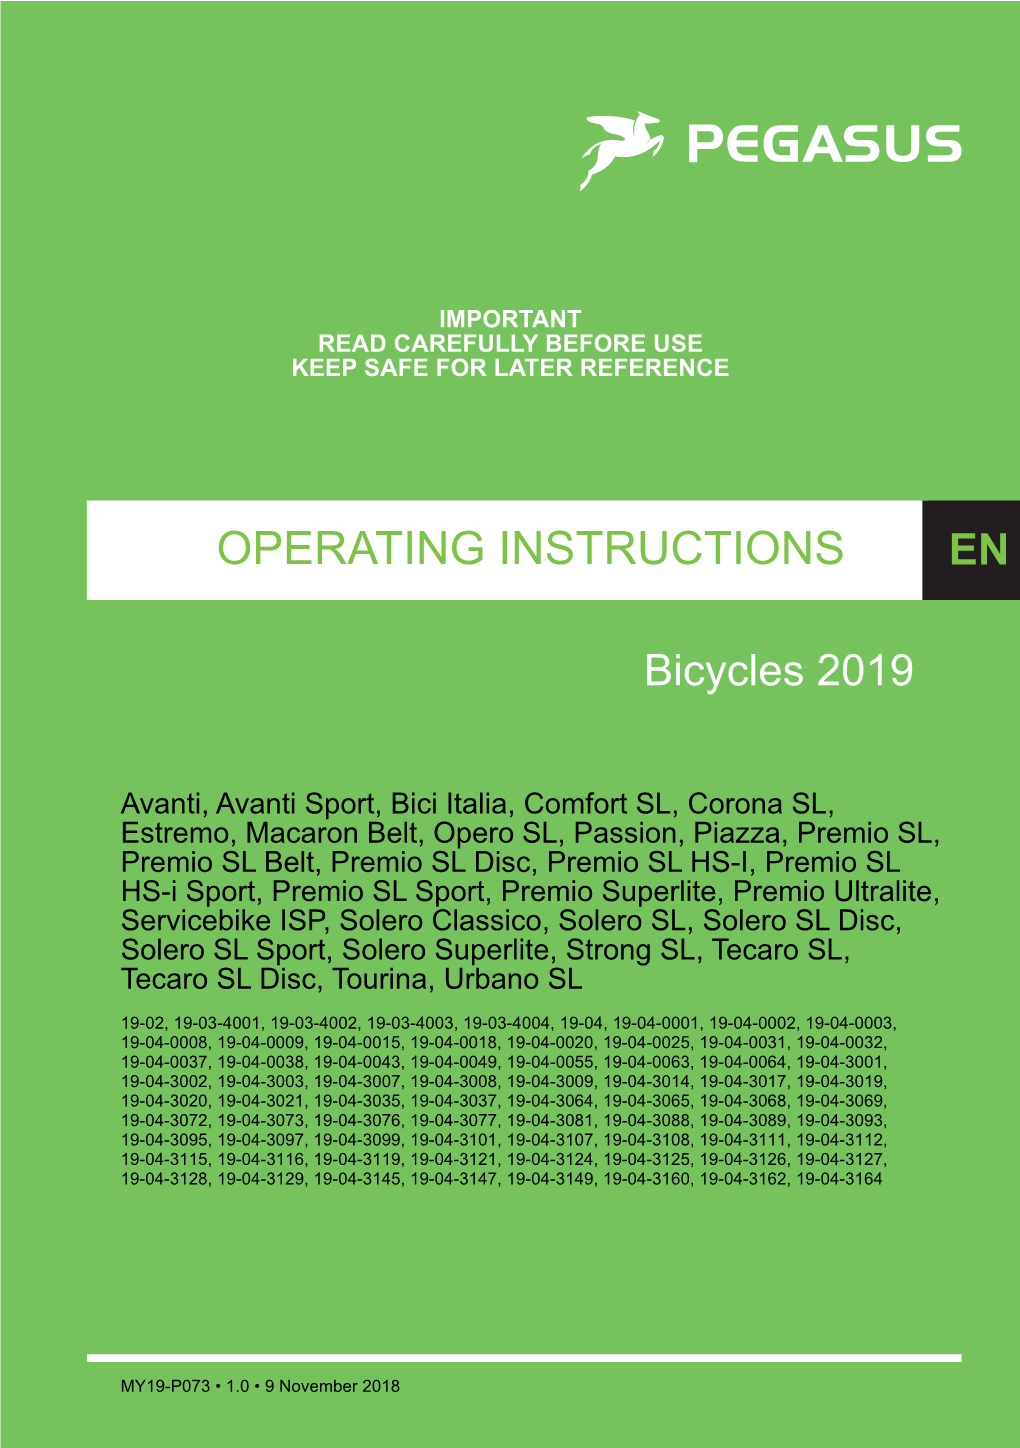 Pegasus OPERATING INSTRUCTIONS Bicycles 2019